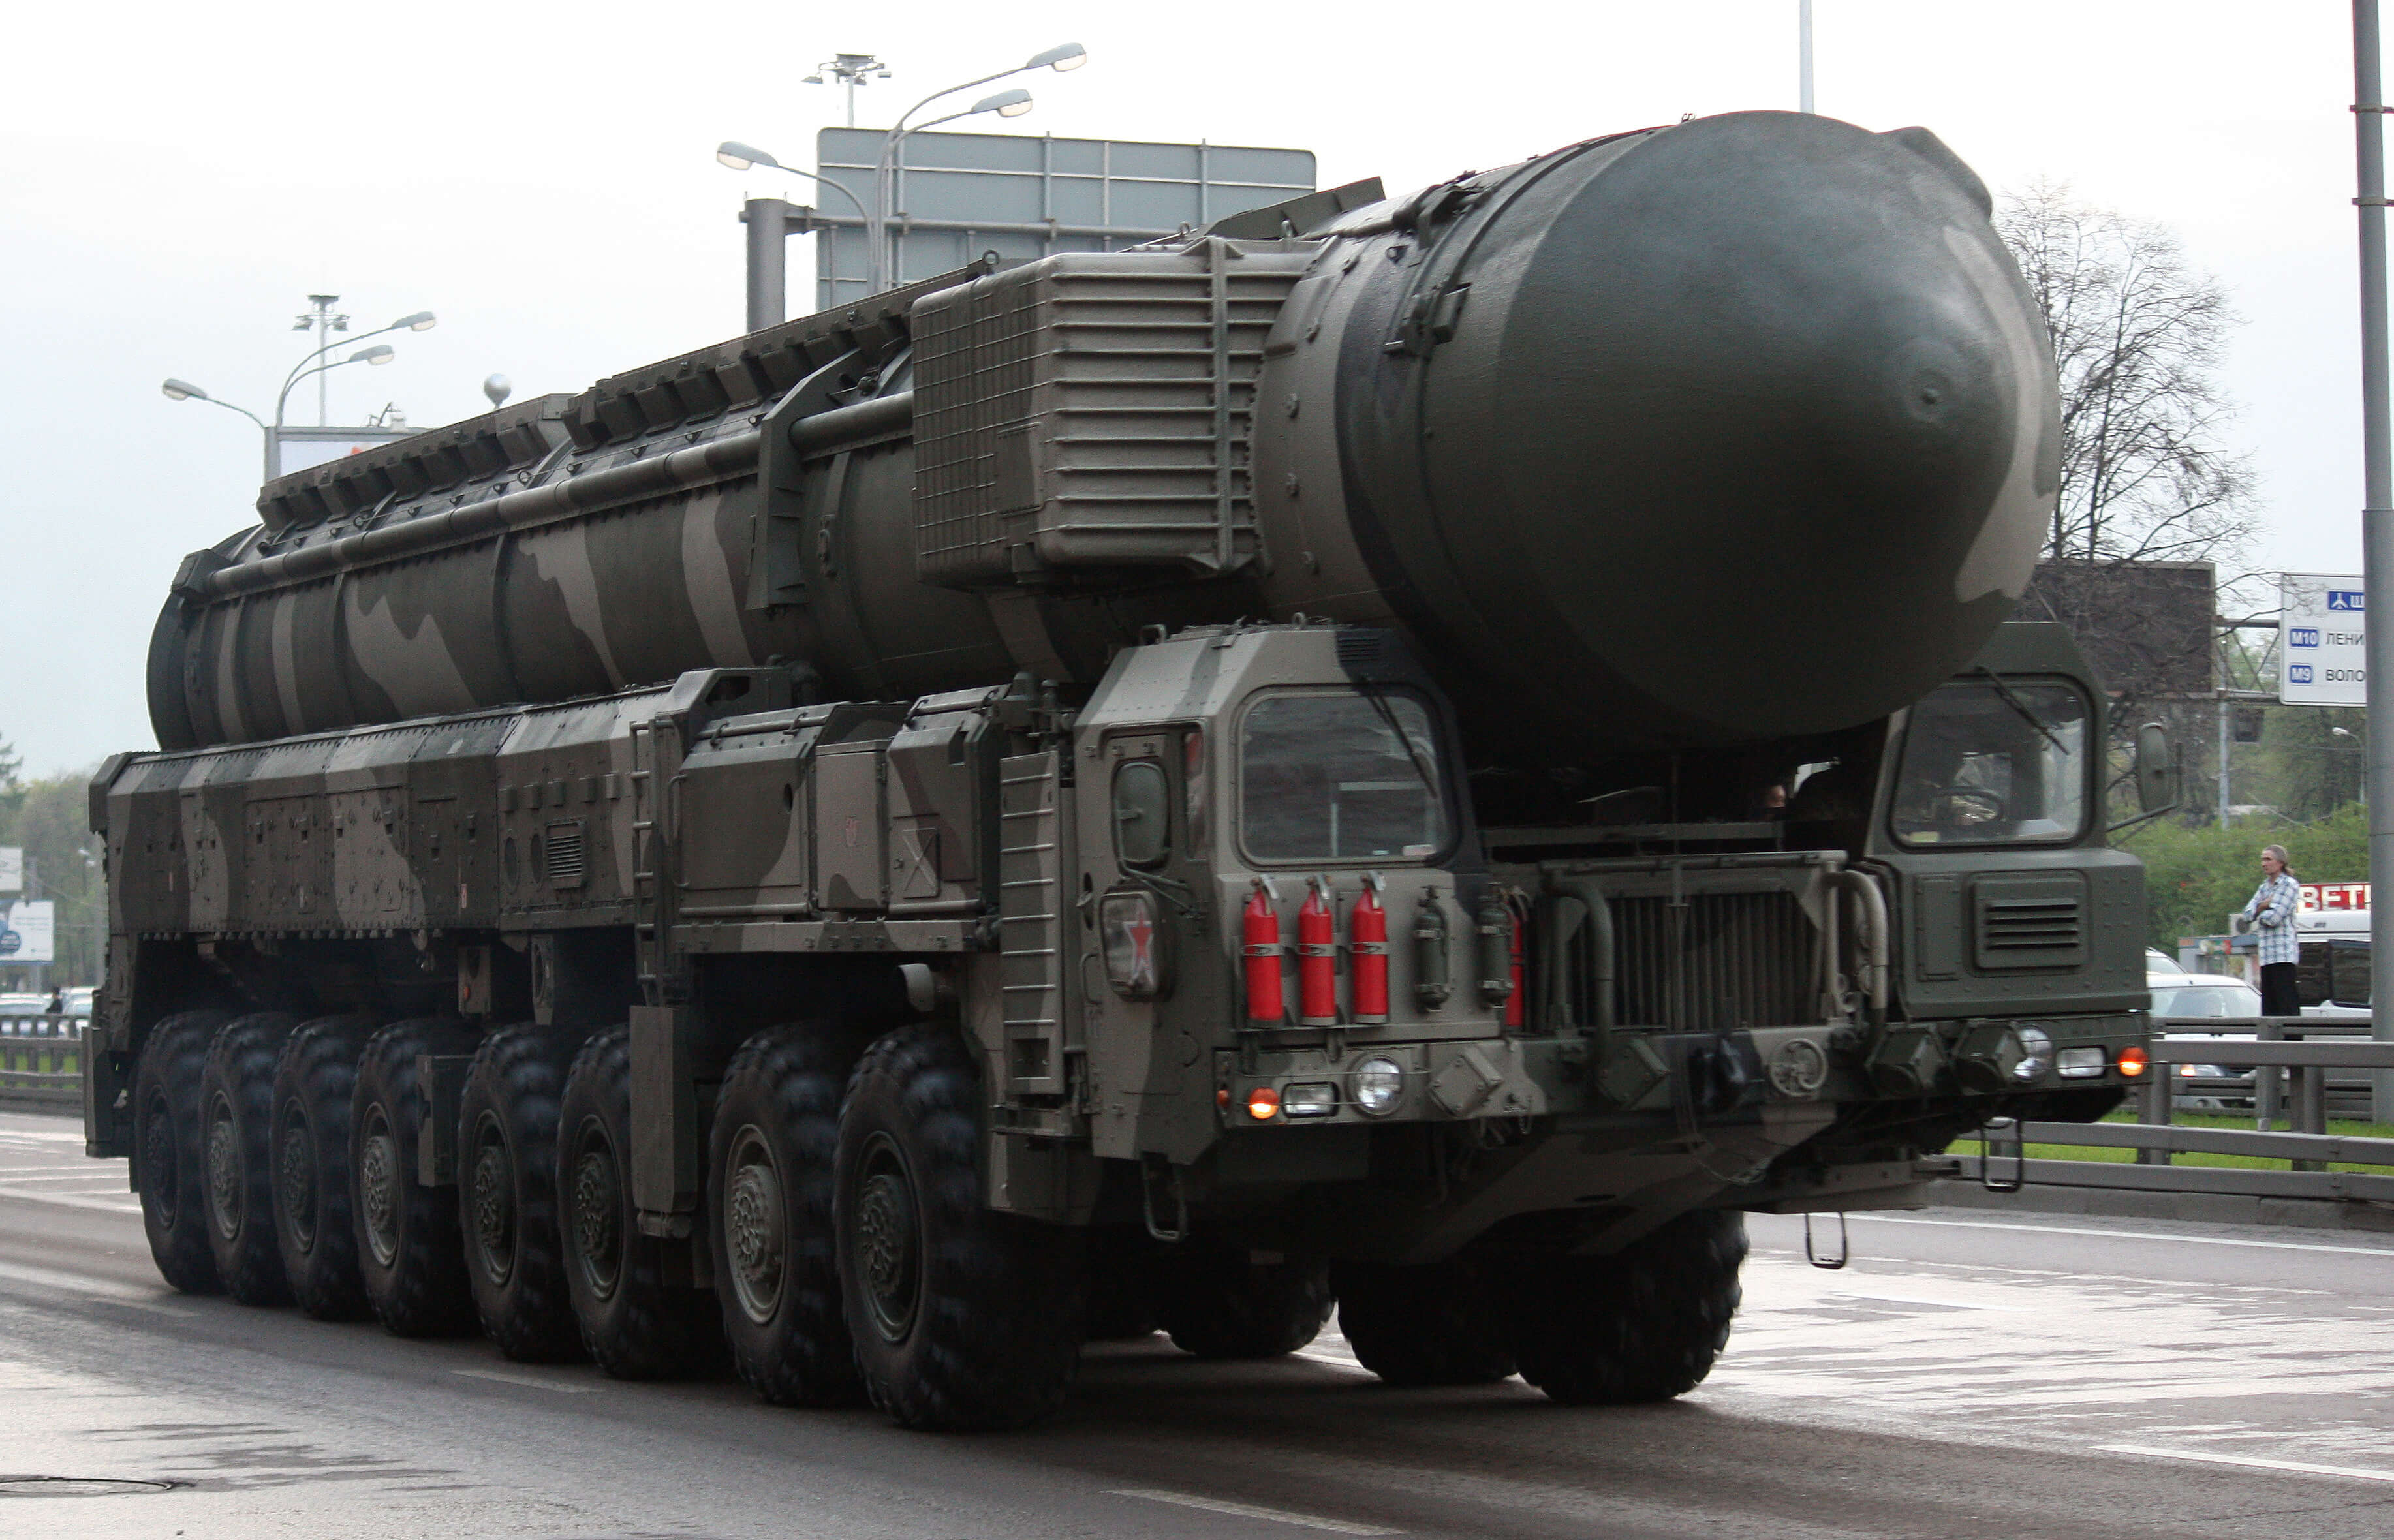 A Russian intercontinental ballistic missile. © Dmitry Terekhov - Flickr